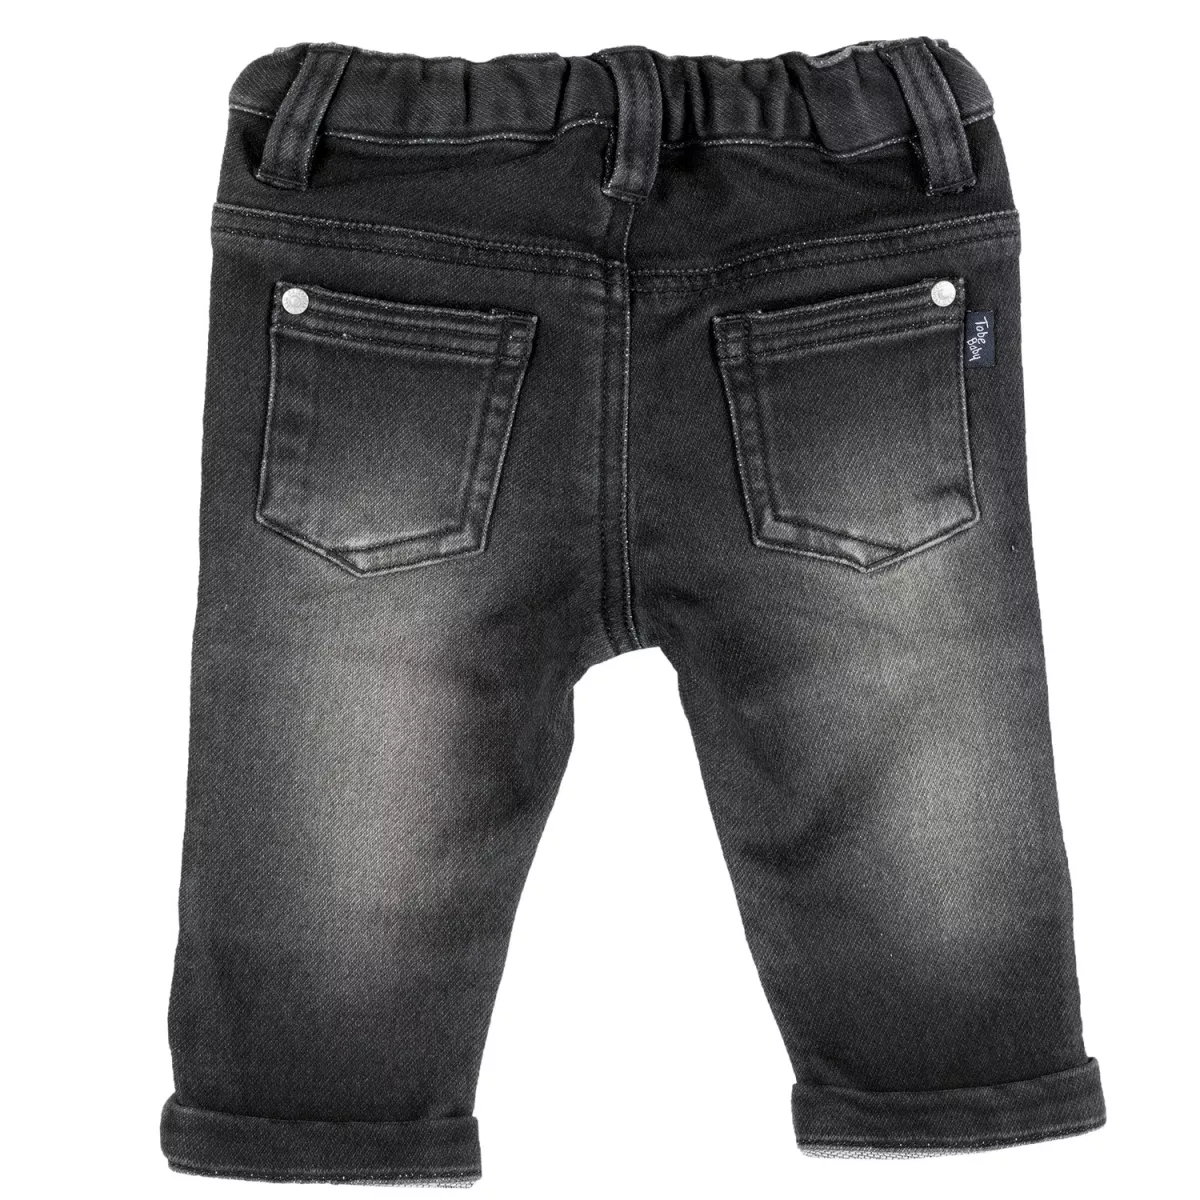 Pantalon copii Chicco, negru, 86